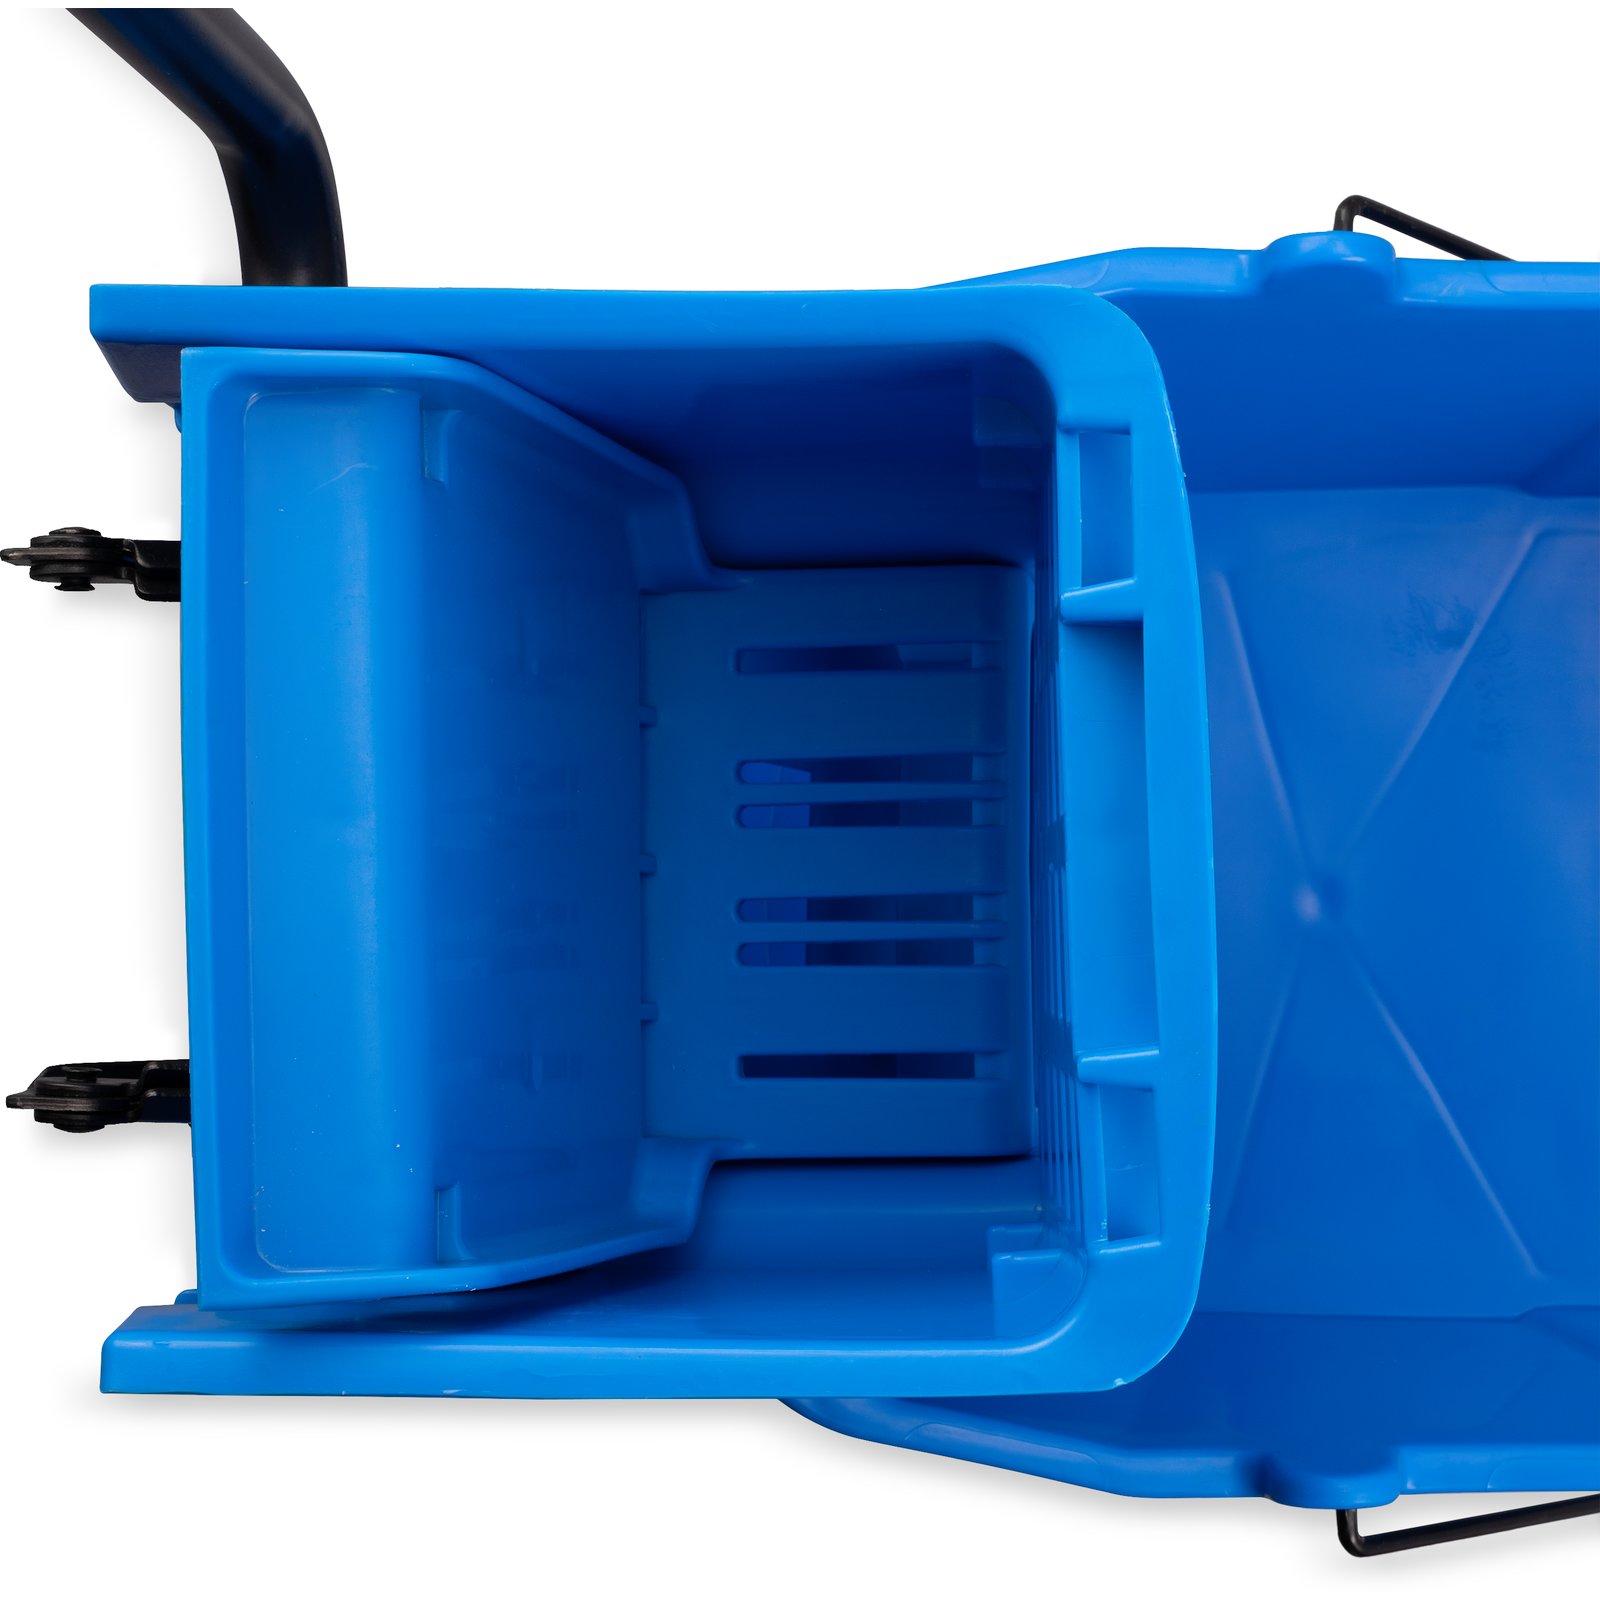 3690414 - Commercial Mop Bucket with Side-Press Wringer 35 Quart - Blue